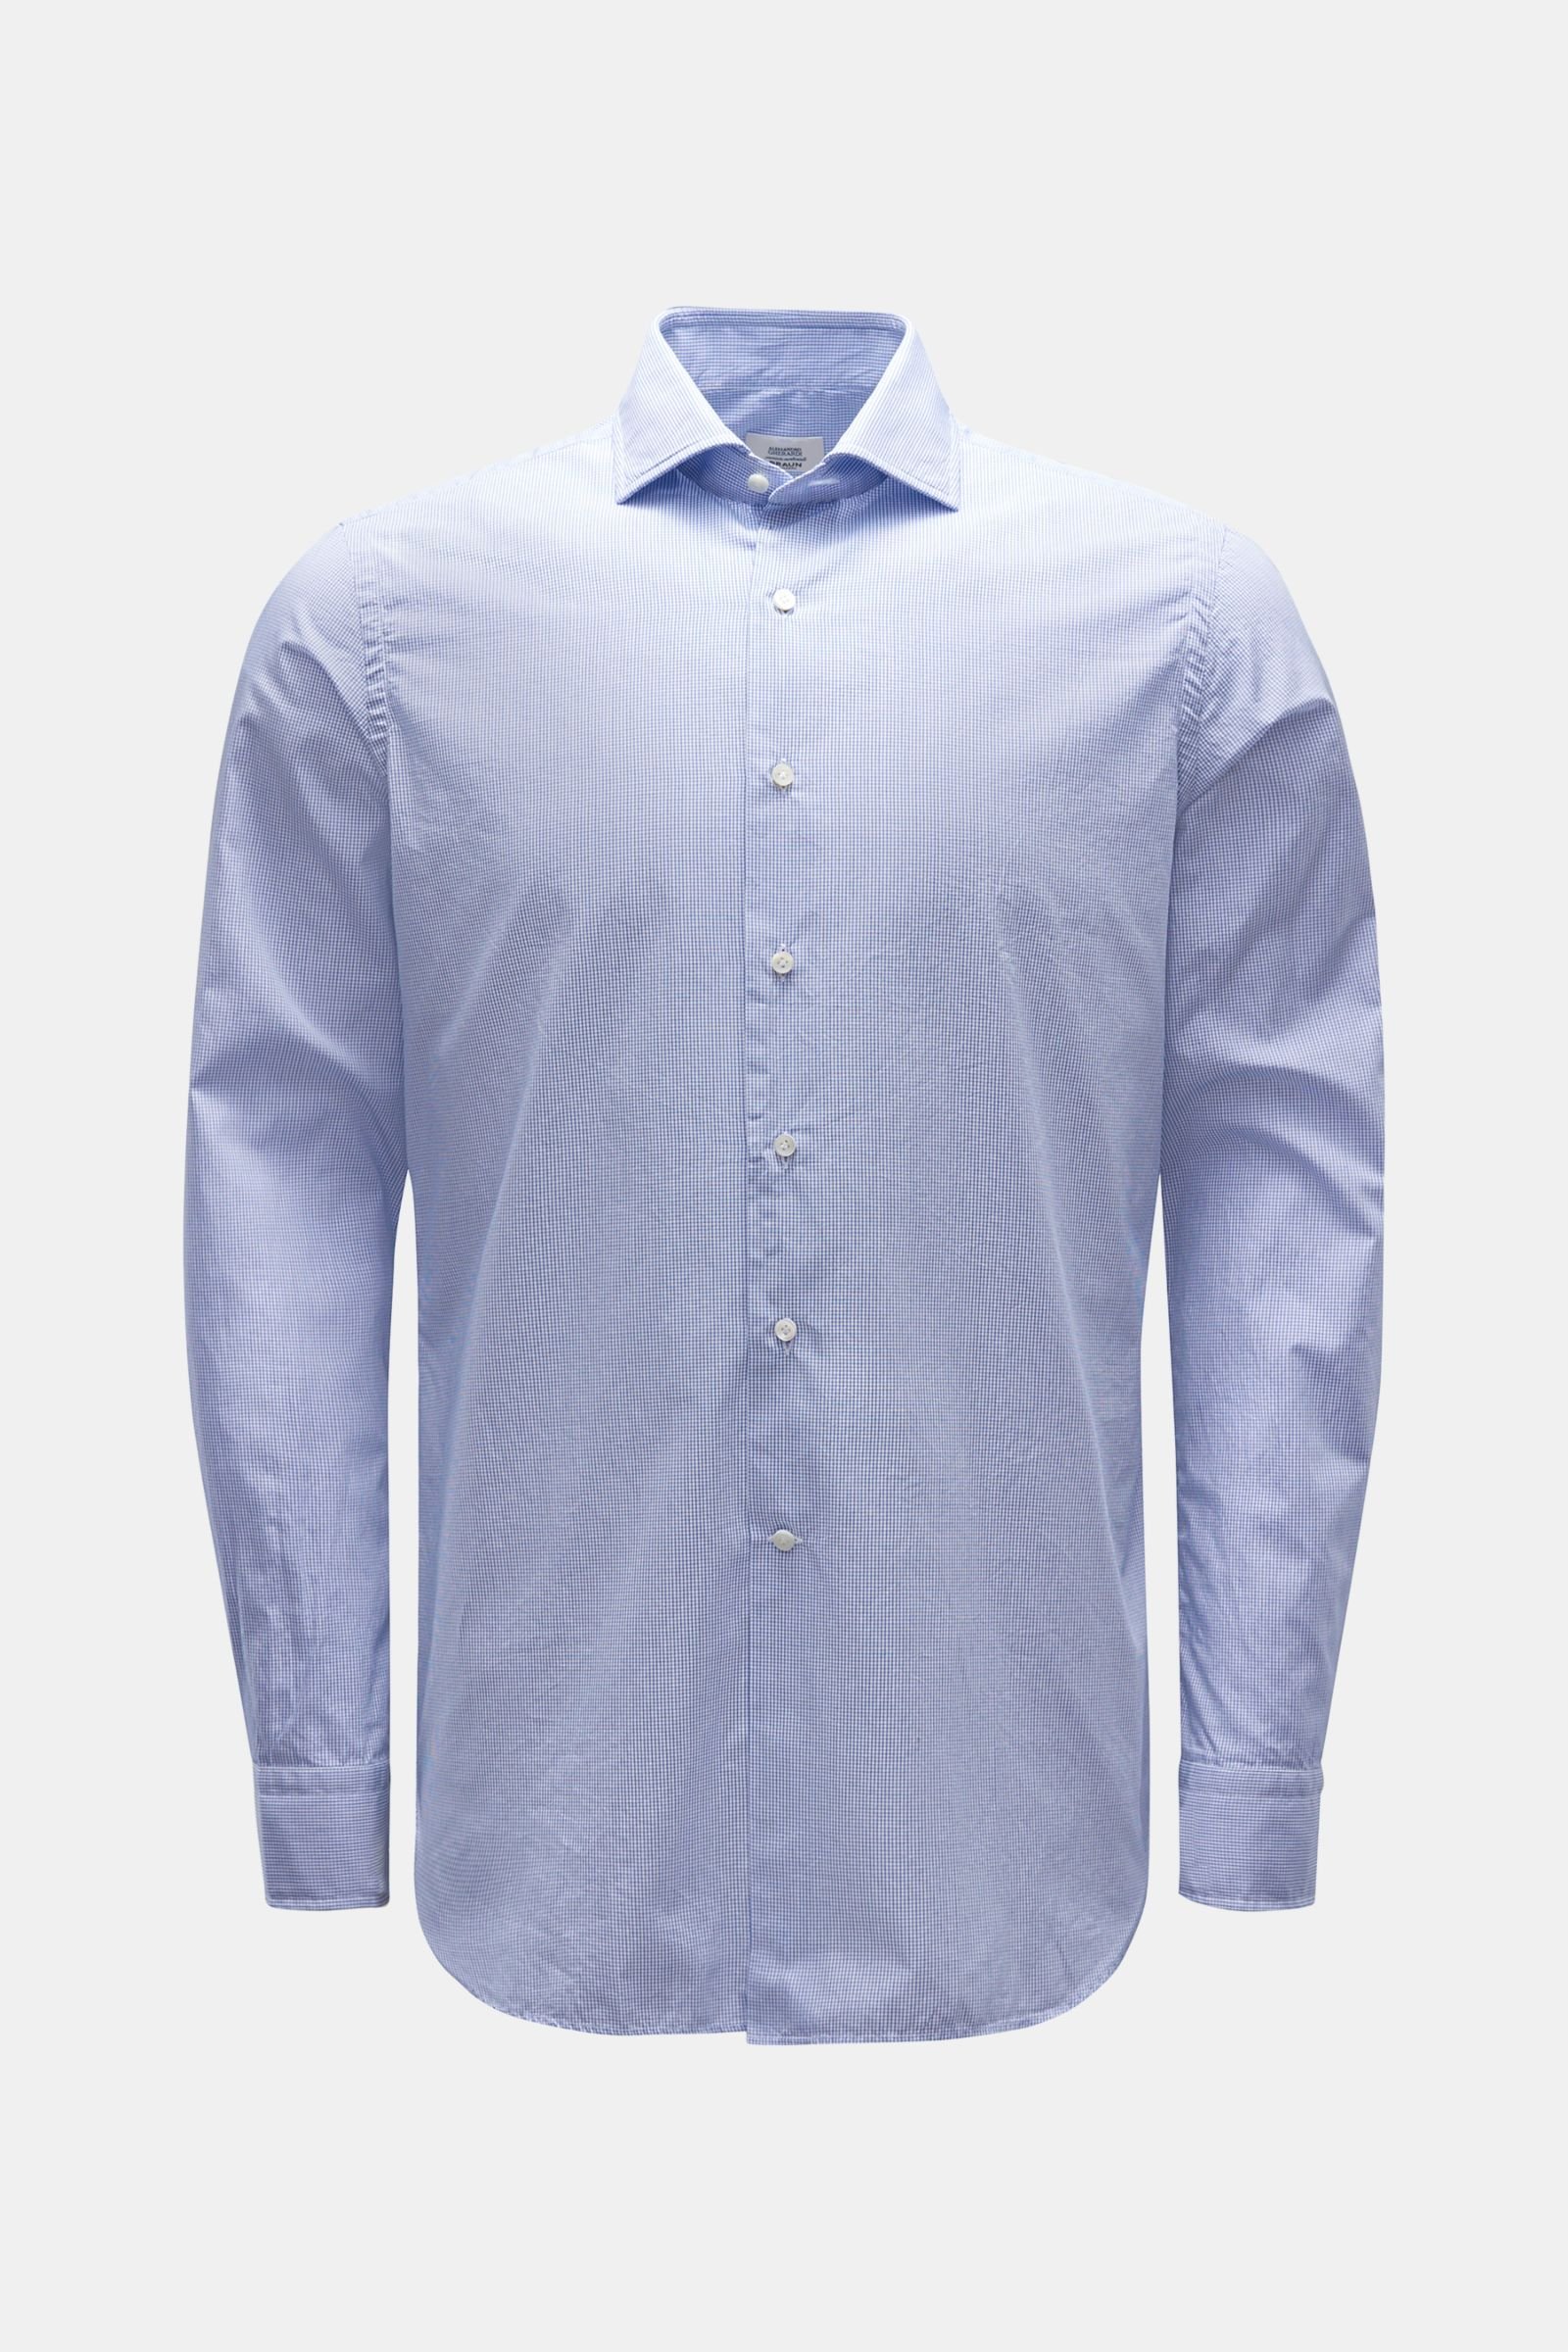 Casual shirt shark collar dark blue/white checked